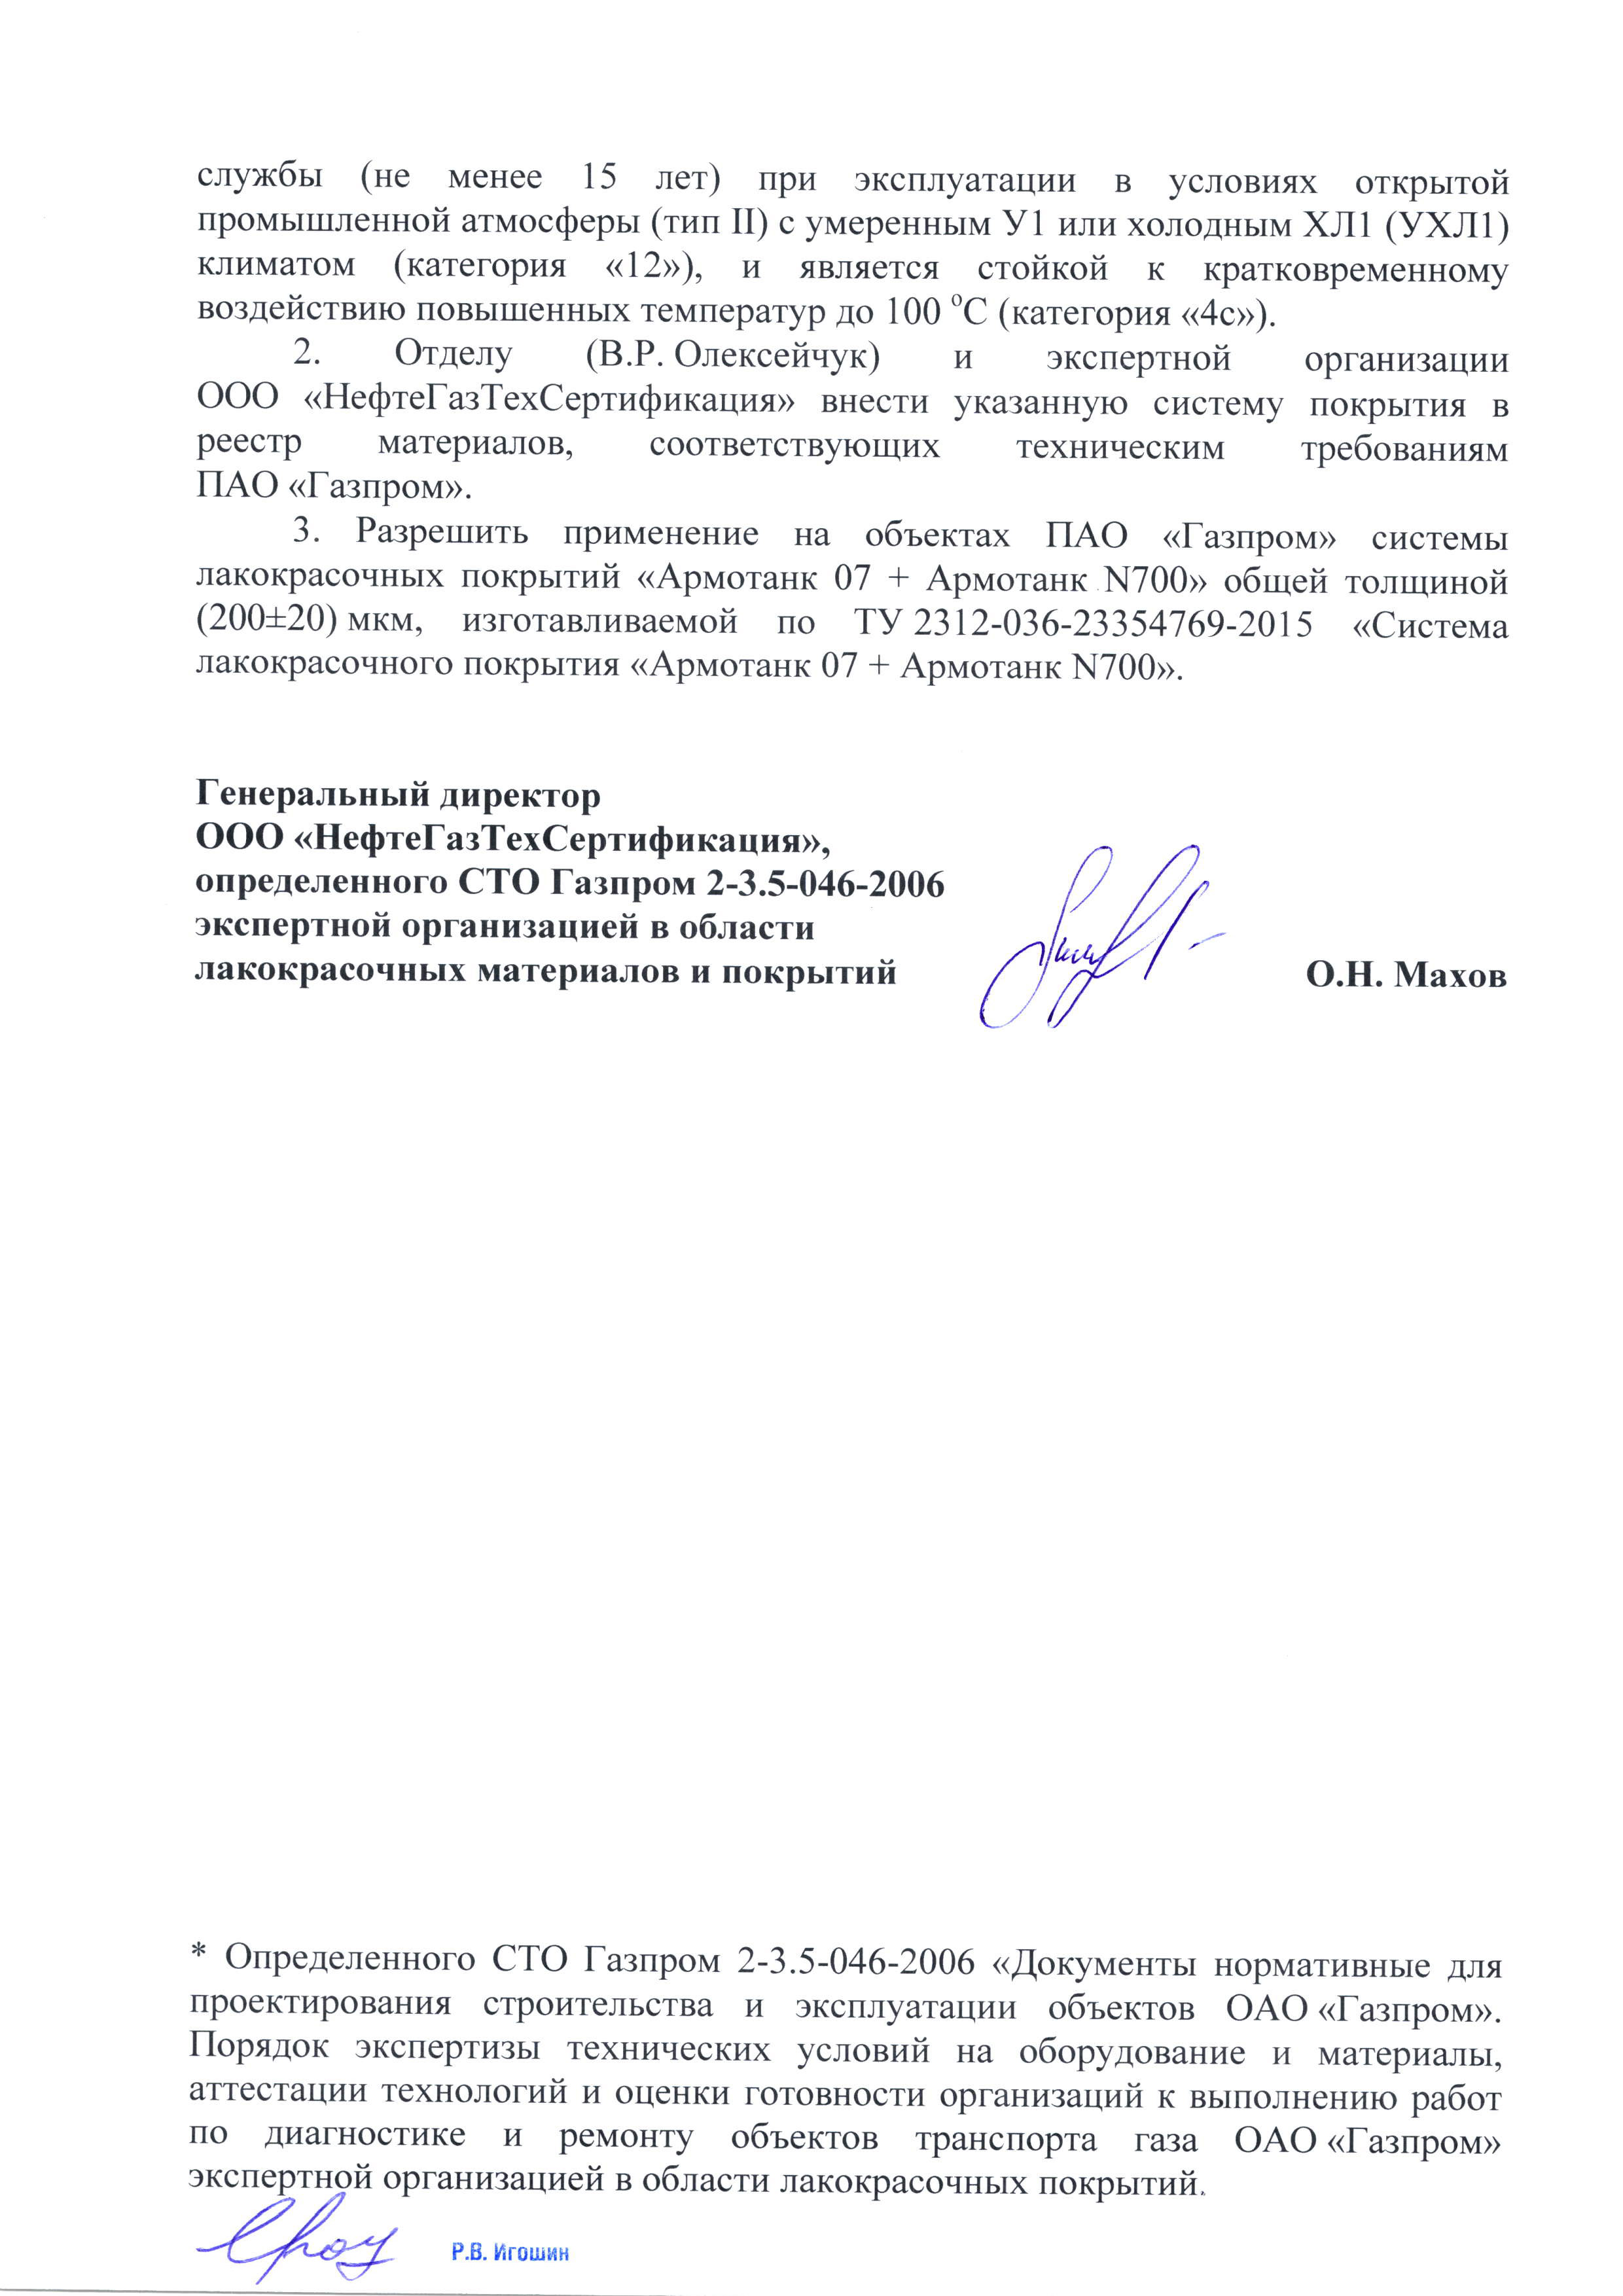 Газпром протокол № 002-17-01 07+N700_Страница_2